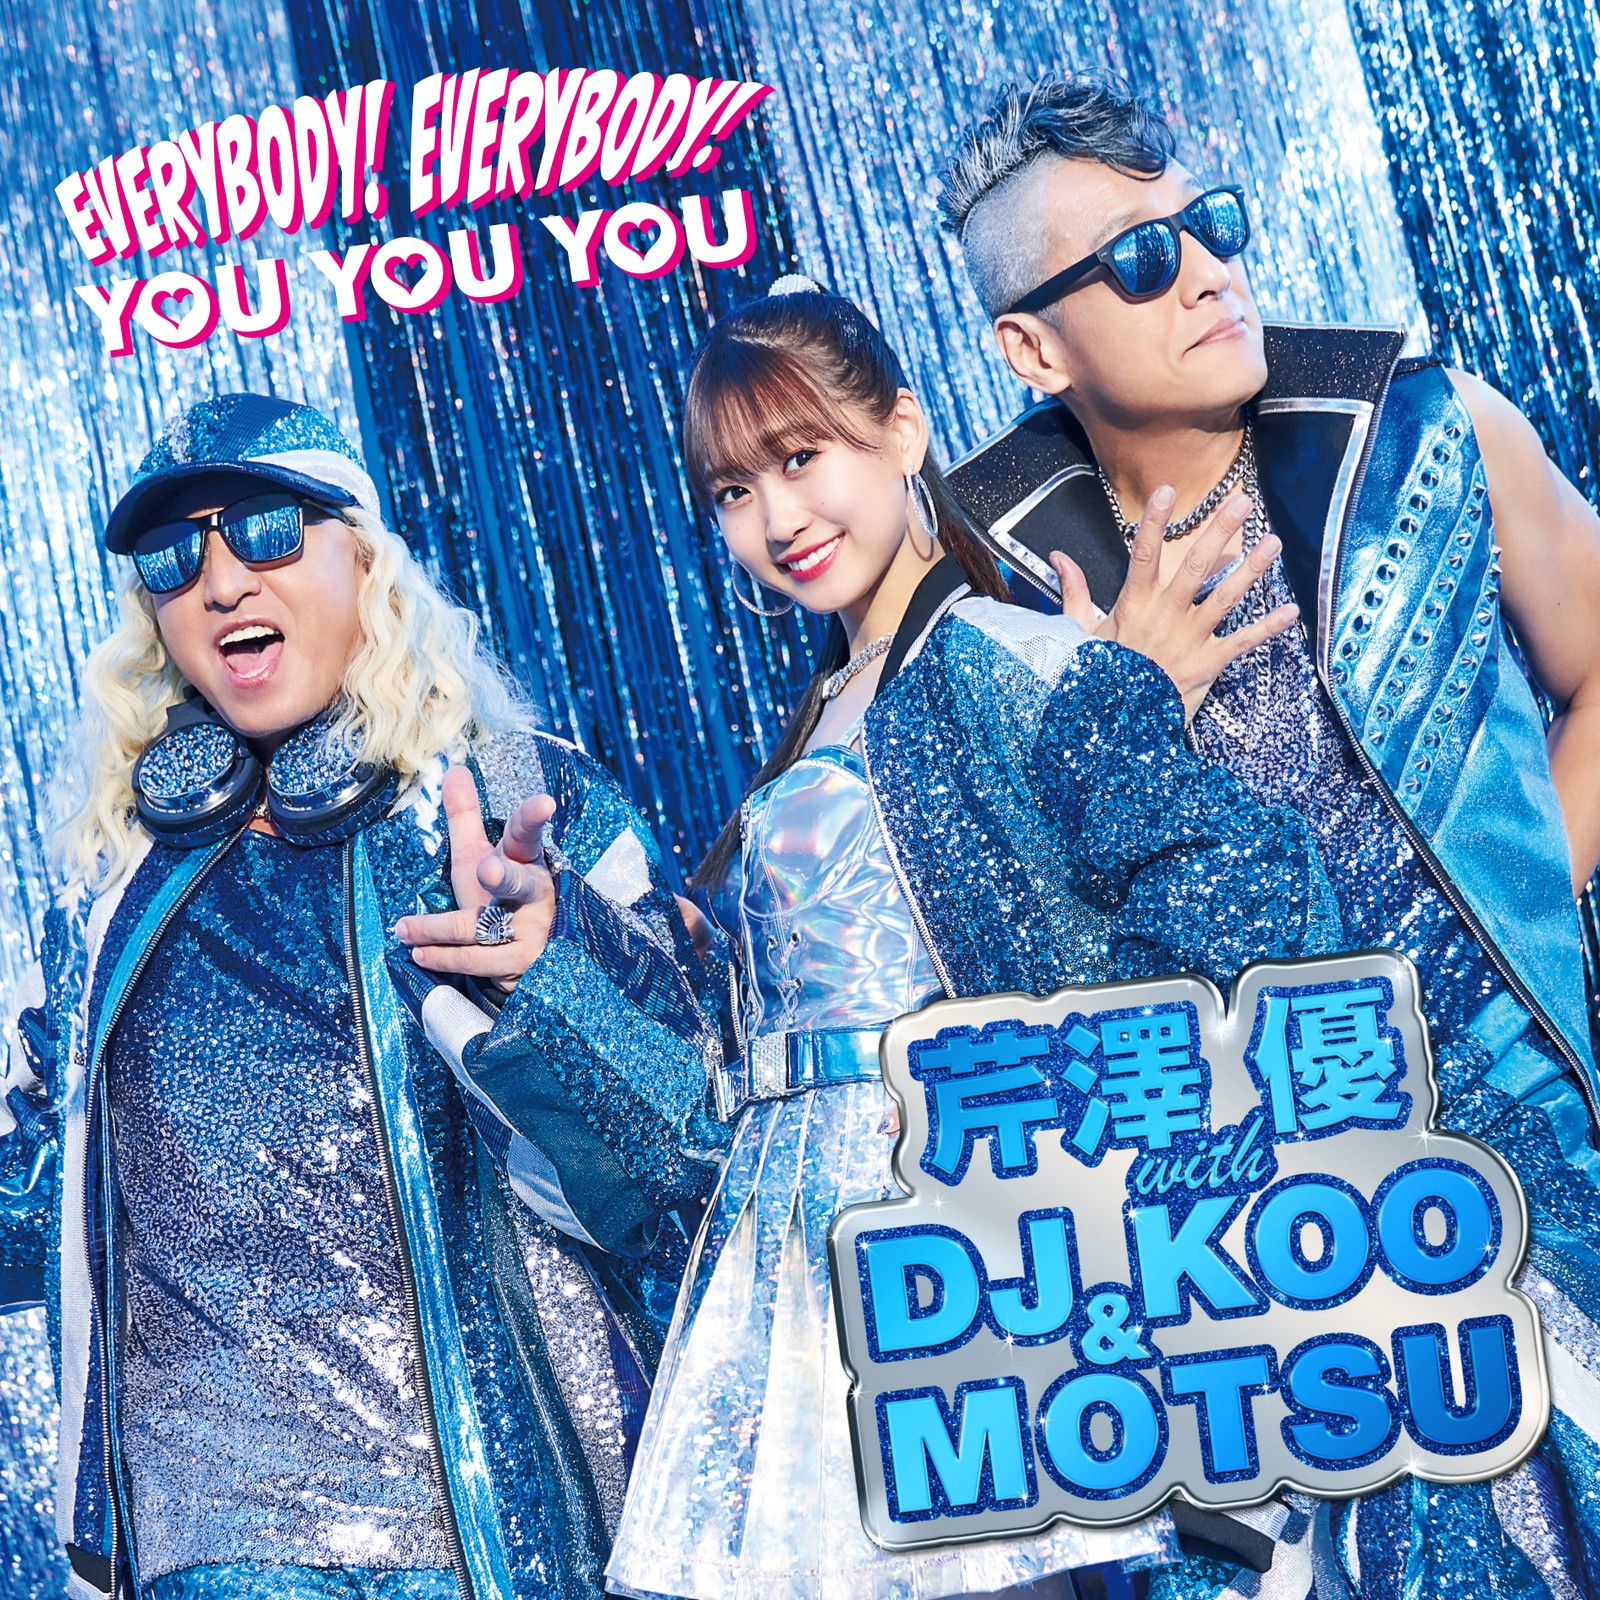 芹澤優 (YU SERIZAWA) with DJ KOO & MOTSU – EVERYBODY! EVERYBODY! YOU YOU YOU [FLAC / 24bit Lossless / WEB] [2021.05.06]